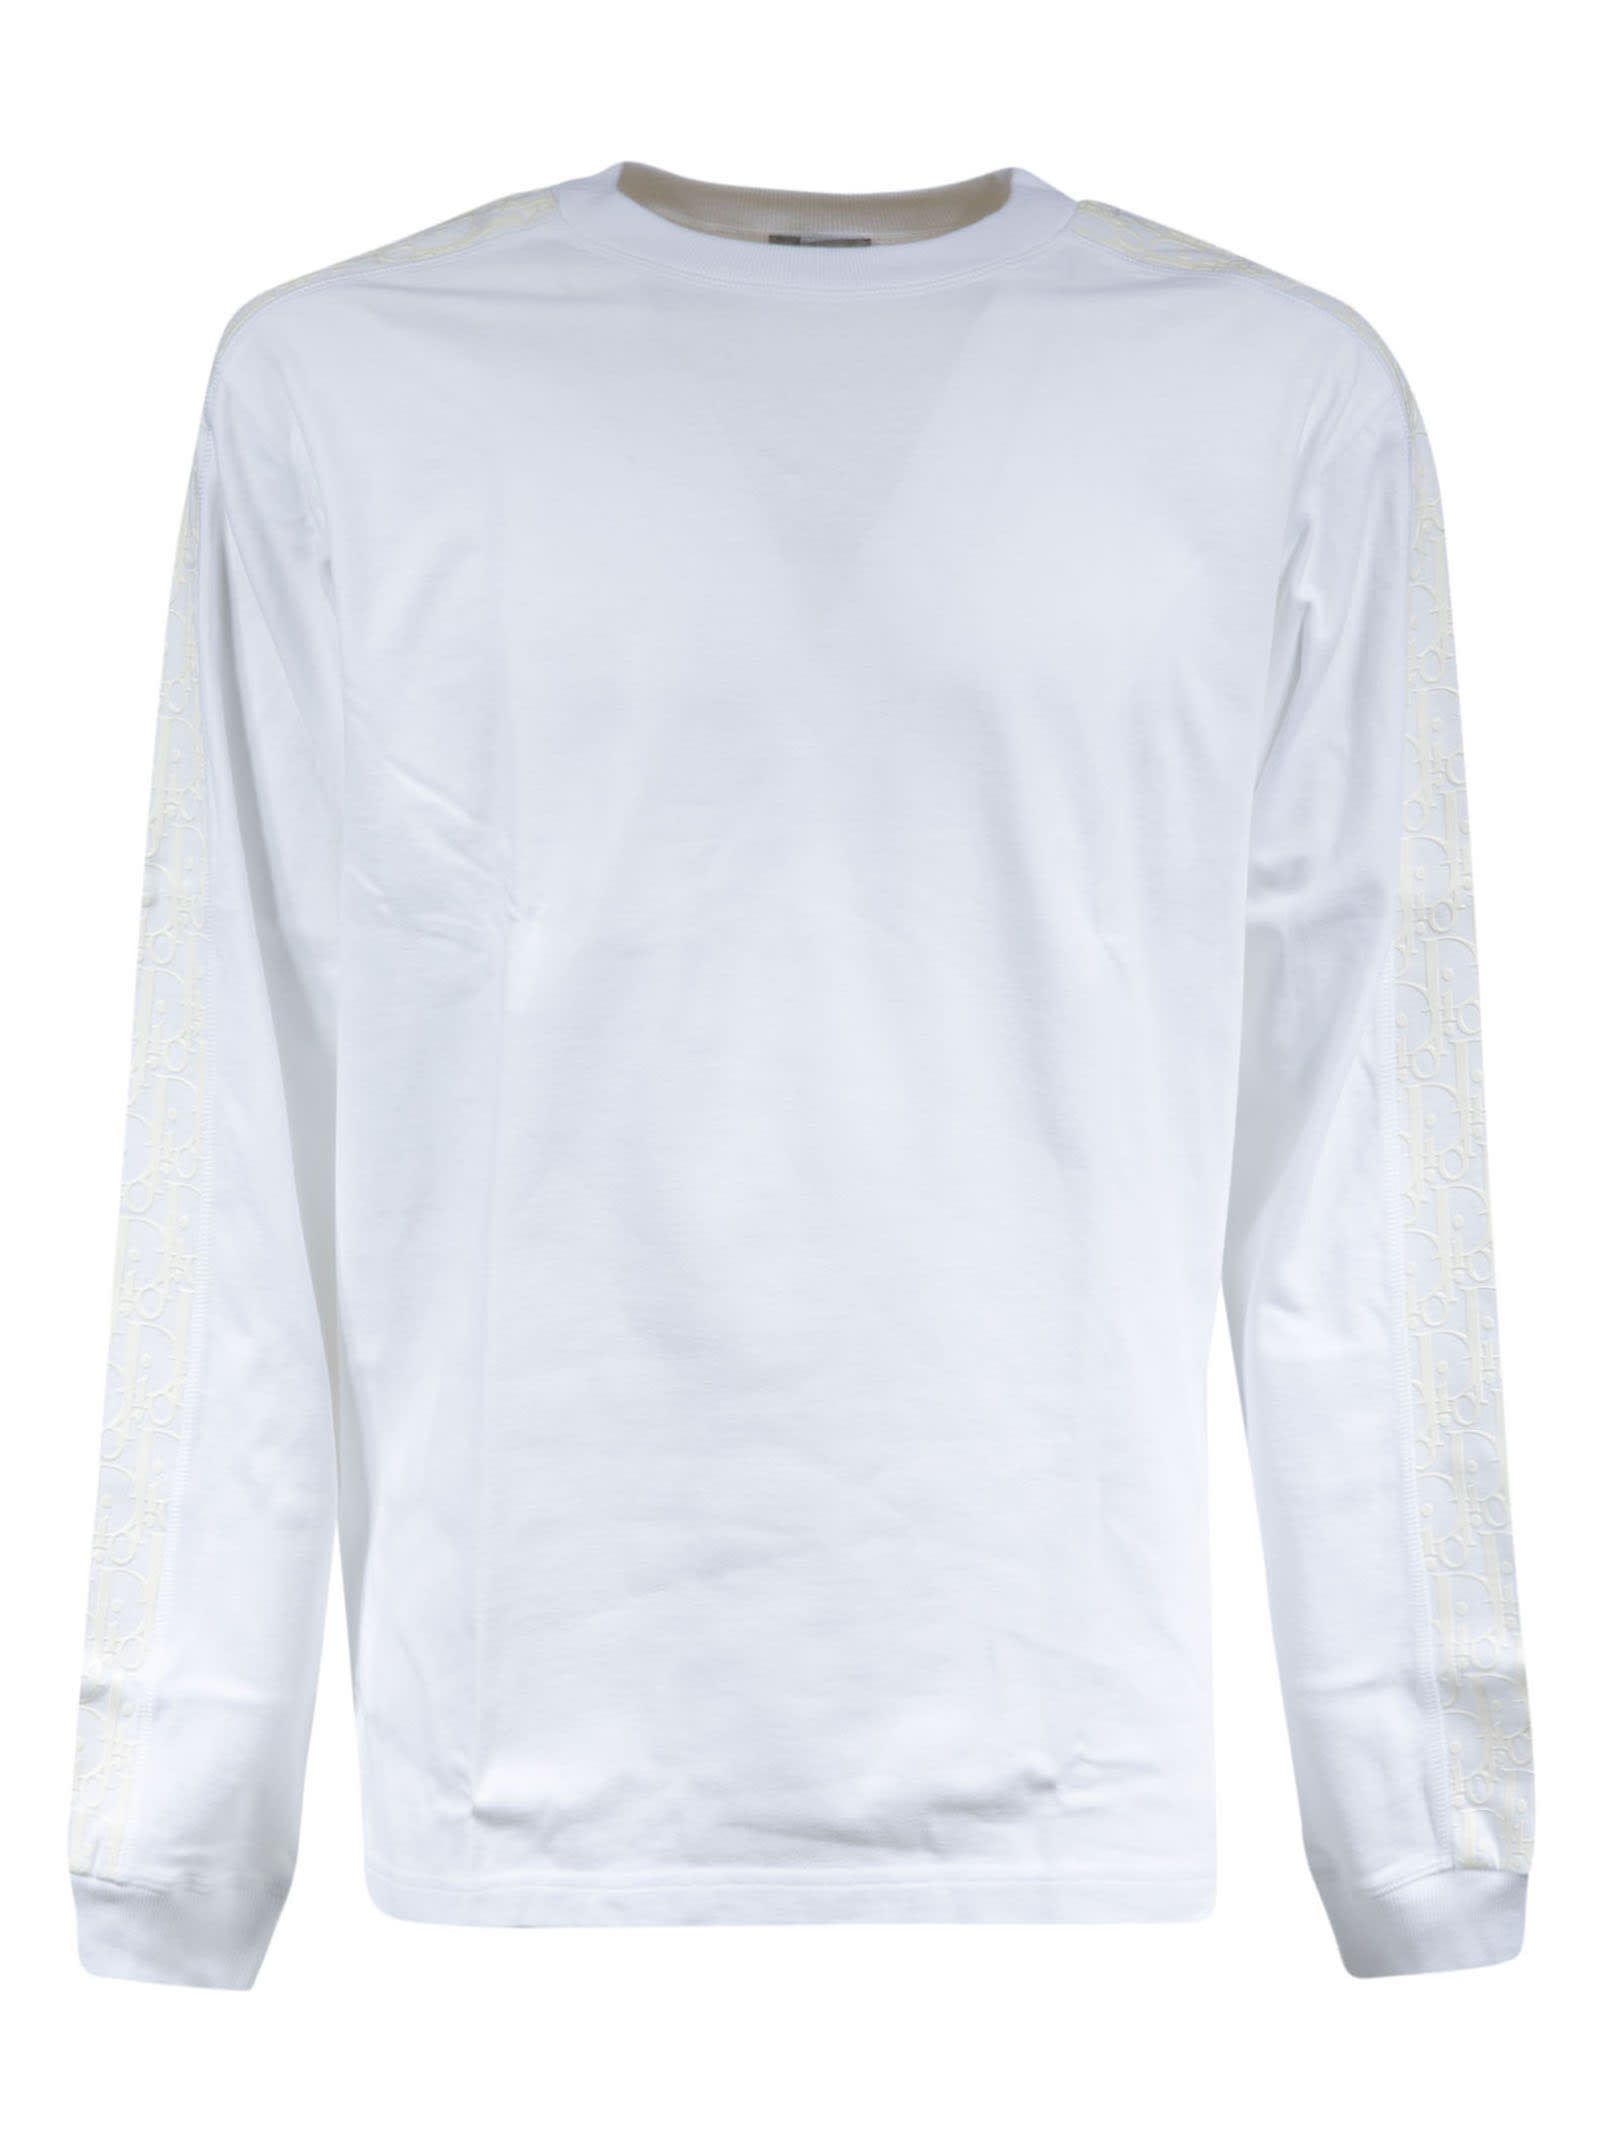 Christian Dior Logo Sleeved Sweatshirt